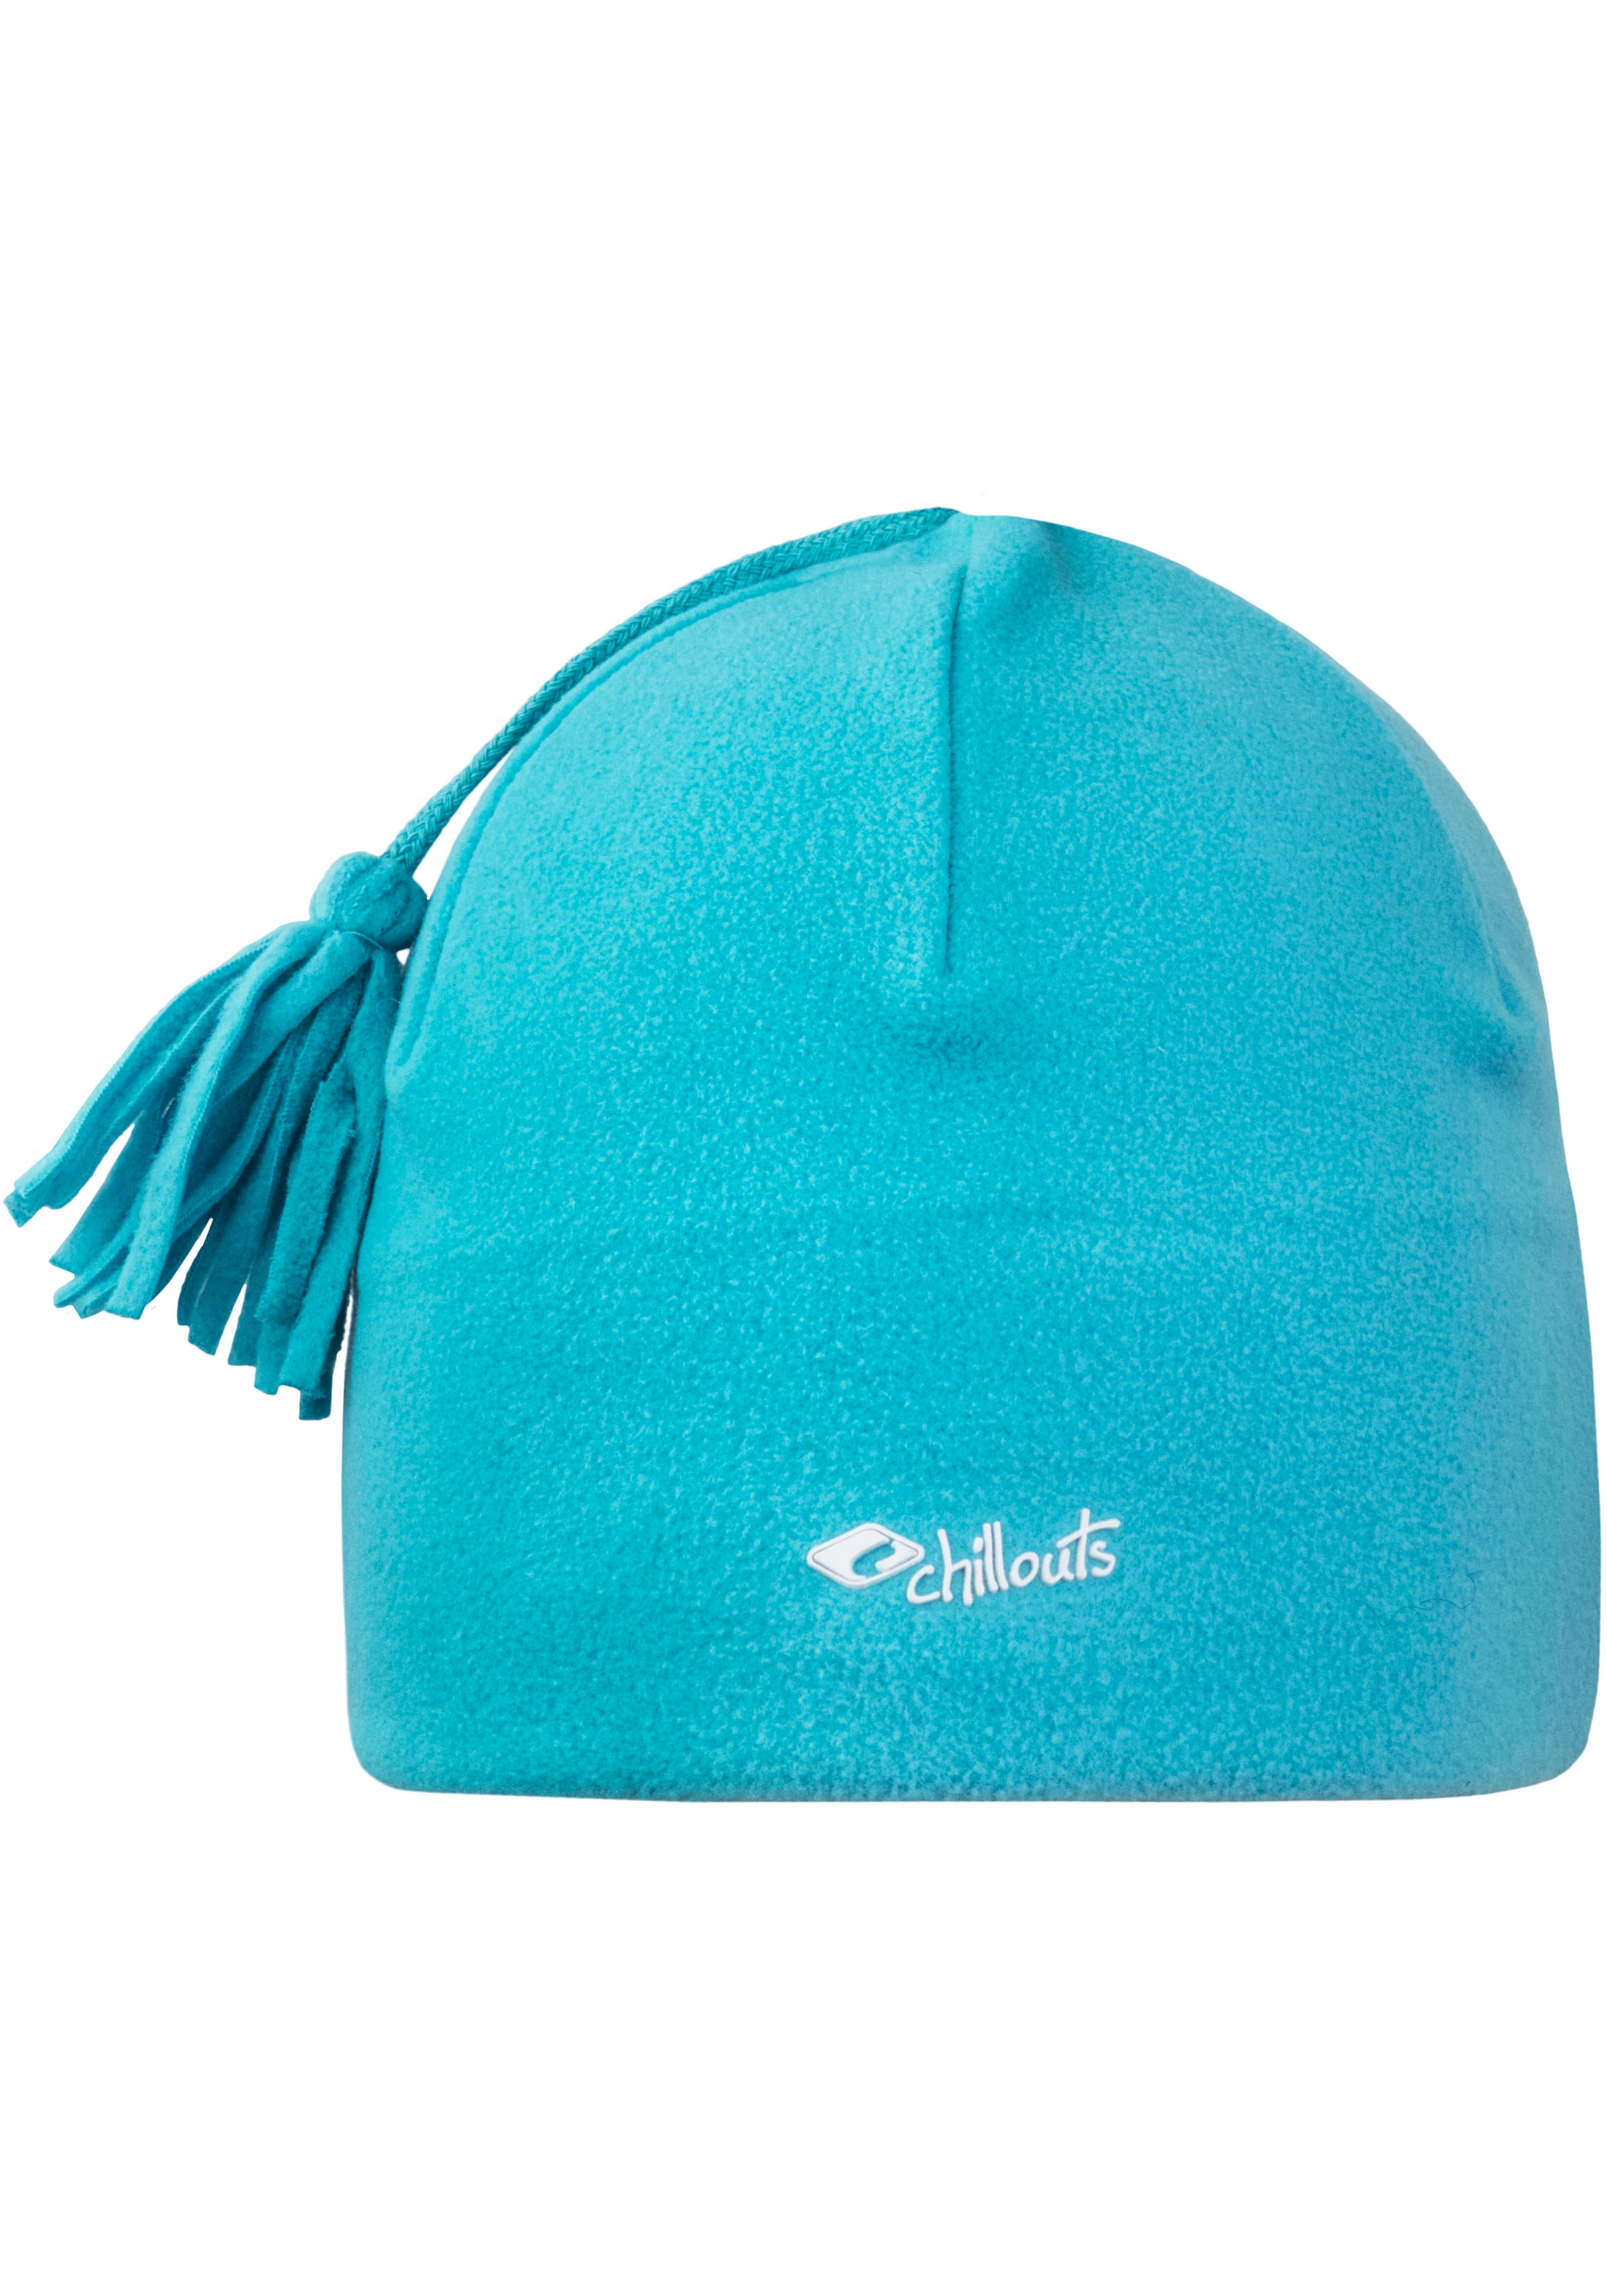 chillouts Fleecemütze, Freeze Fleece BAUR kaufen Hat | Pom online